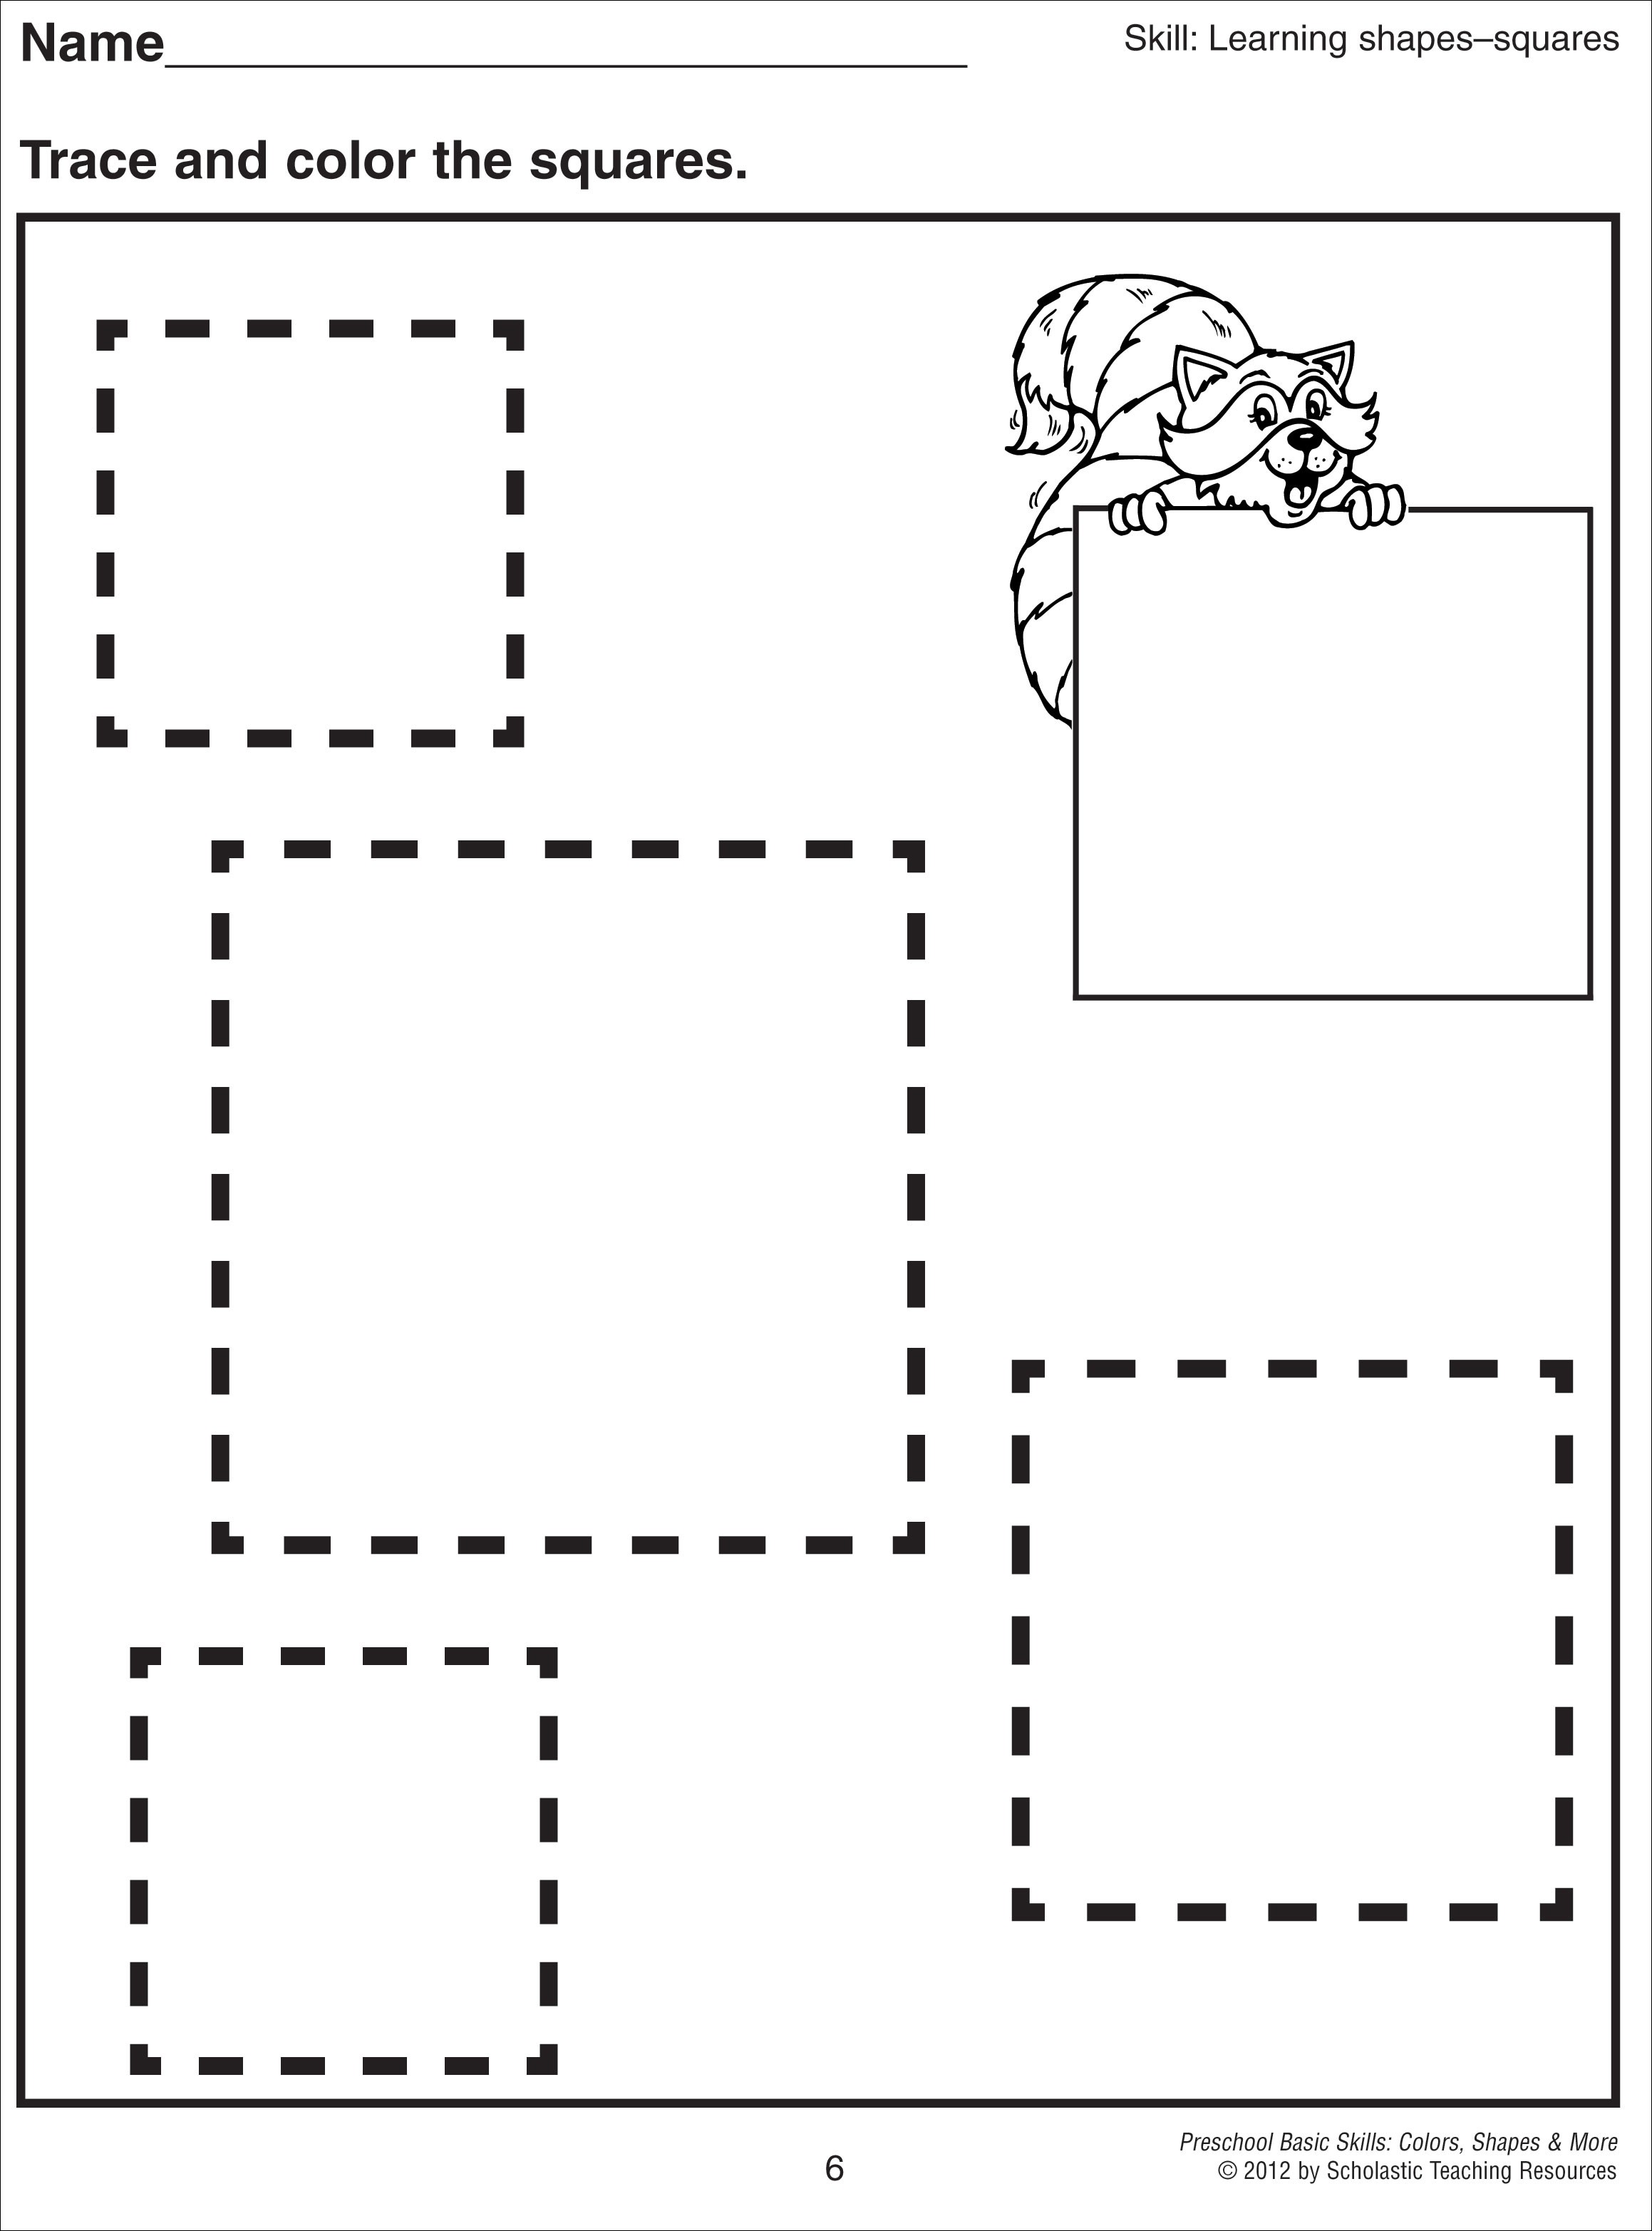 5-best-images-of-printable-square-kindergarten-preschool-worksheets-9